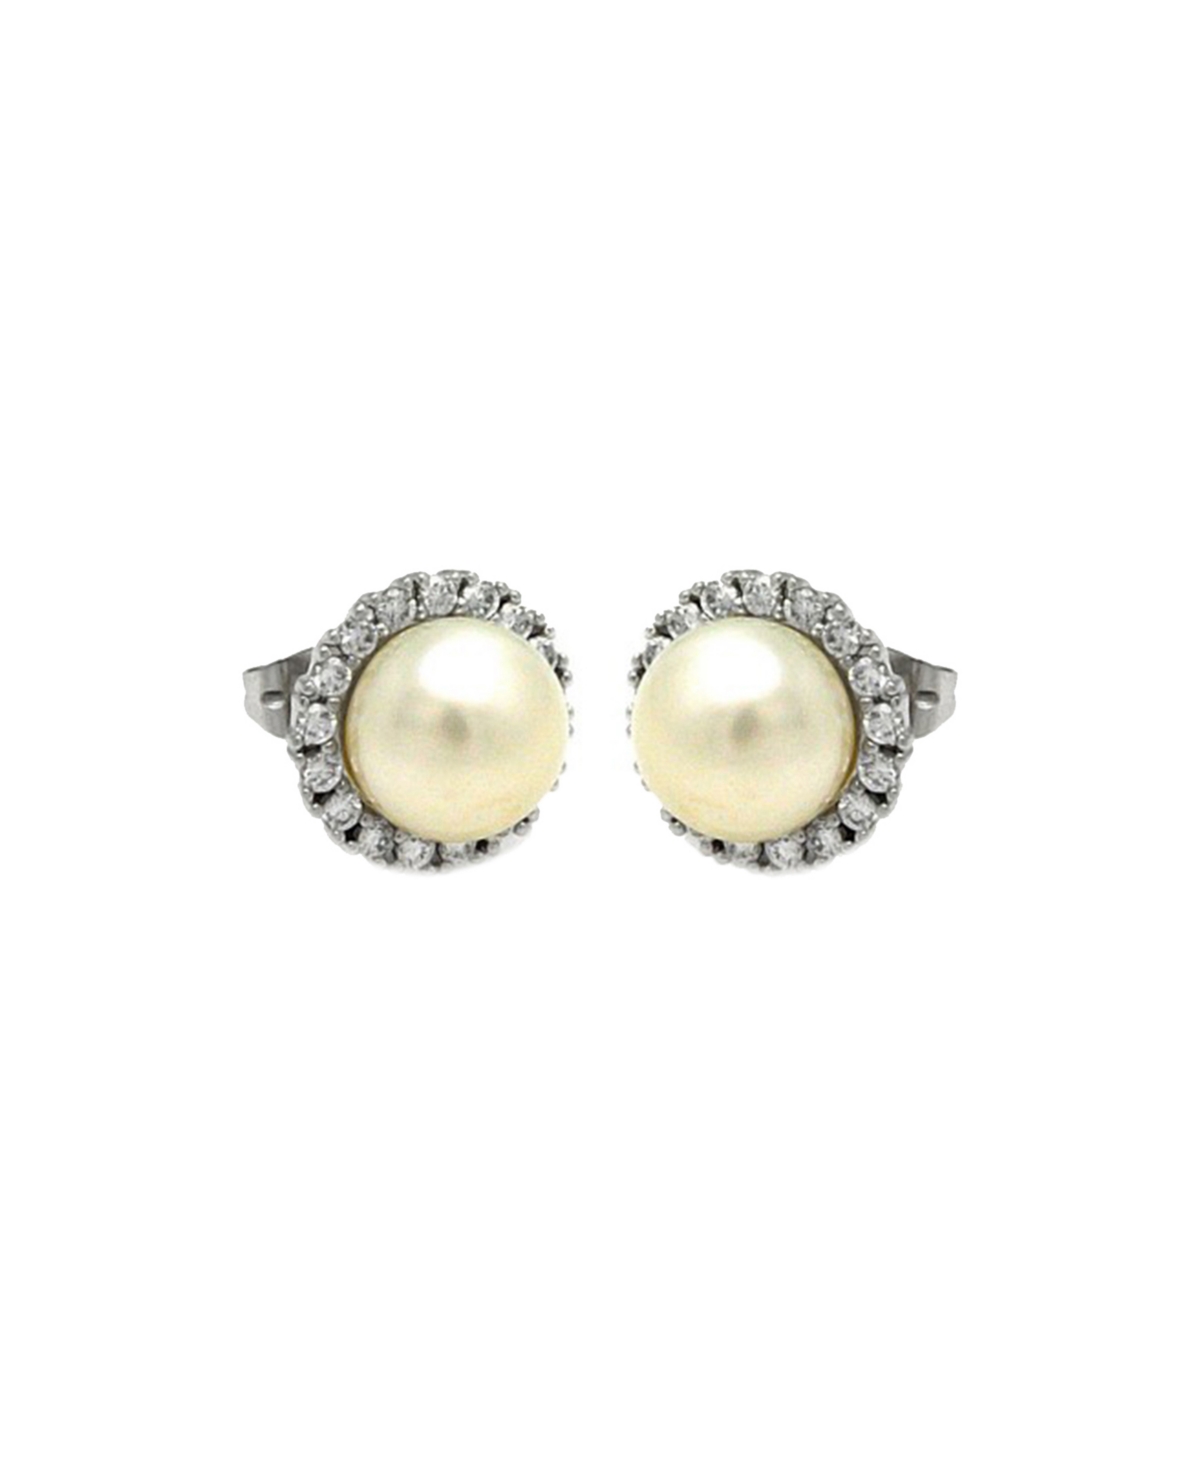 Freshwater Pearl Halo Earrings - Silver-Tone, White